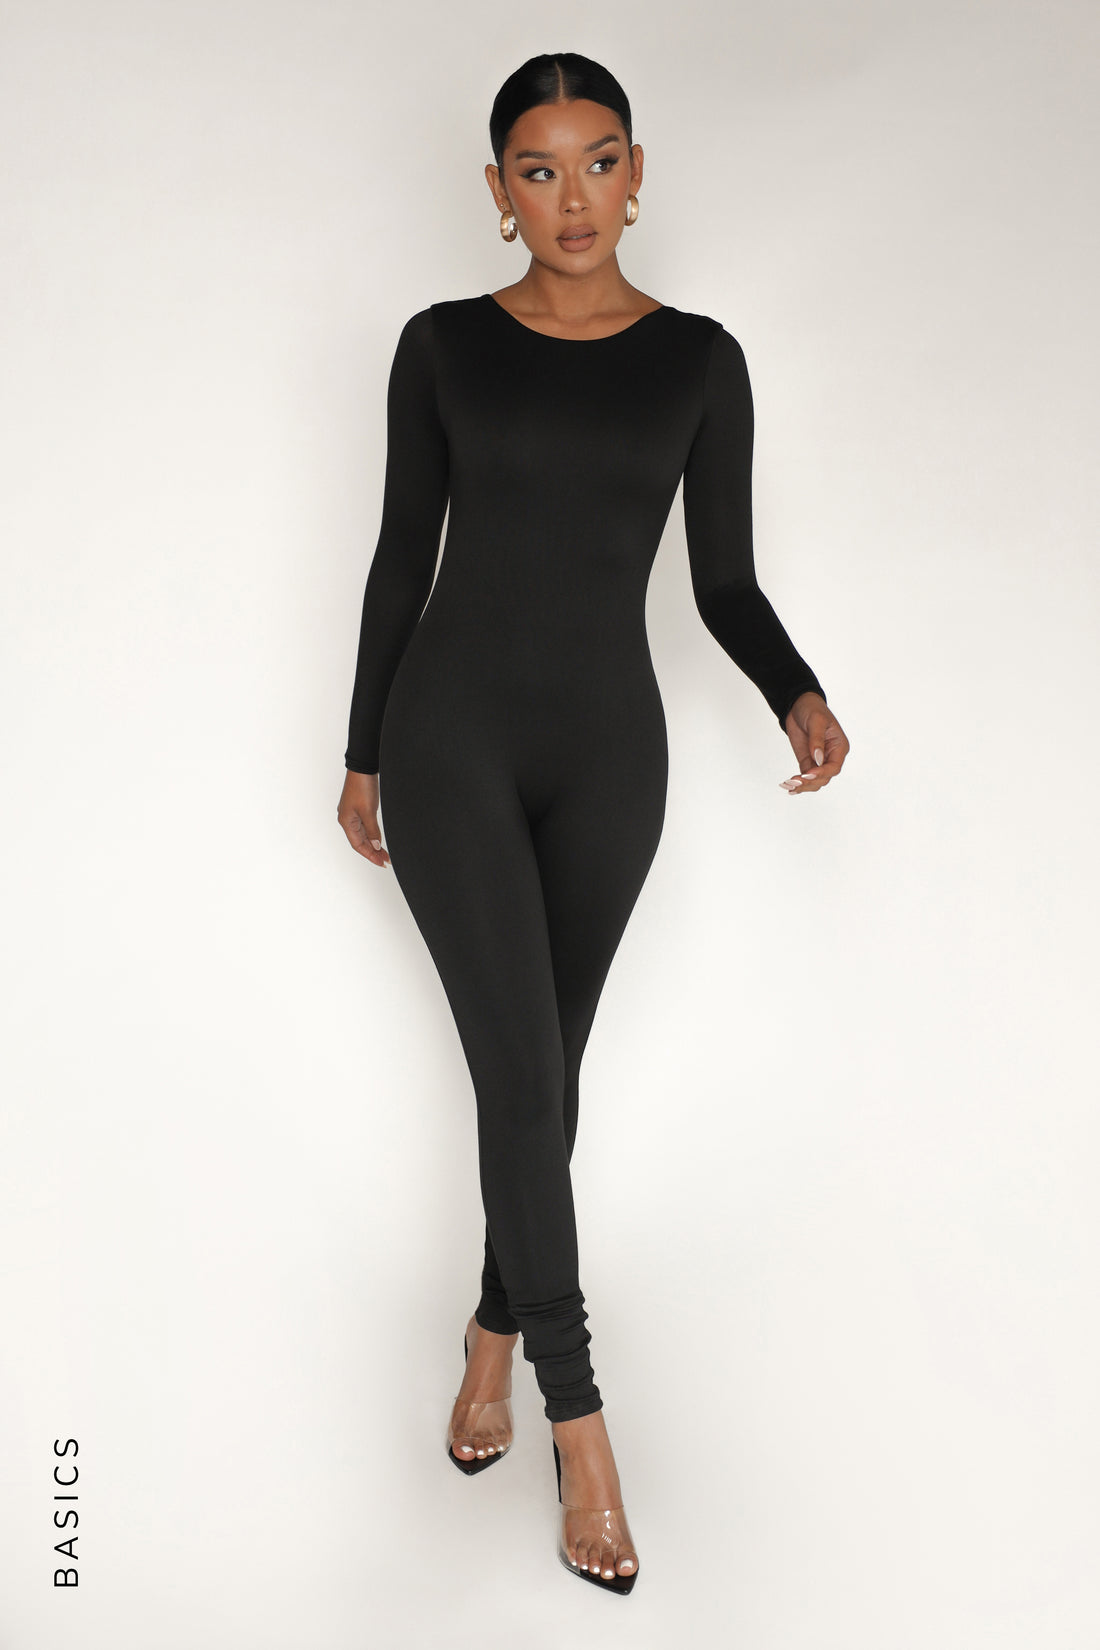 Black Skinny Hooded Jumpsuit For Women Long Sleeve Backless